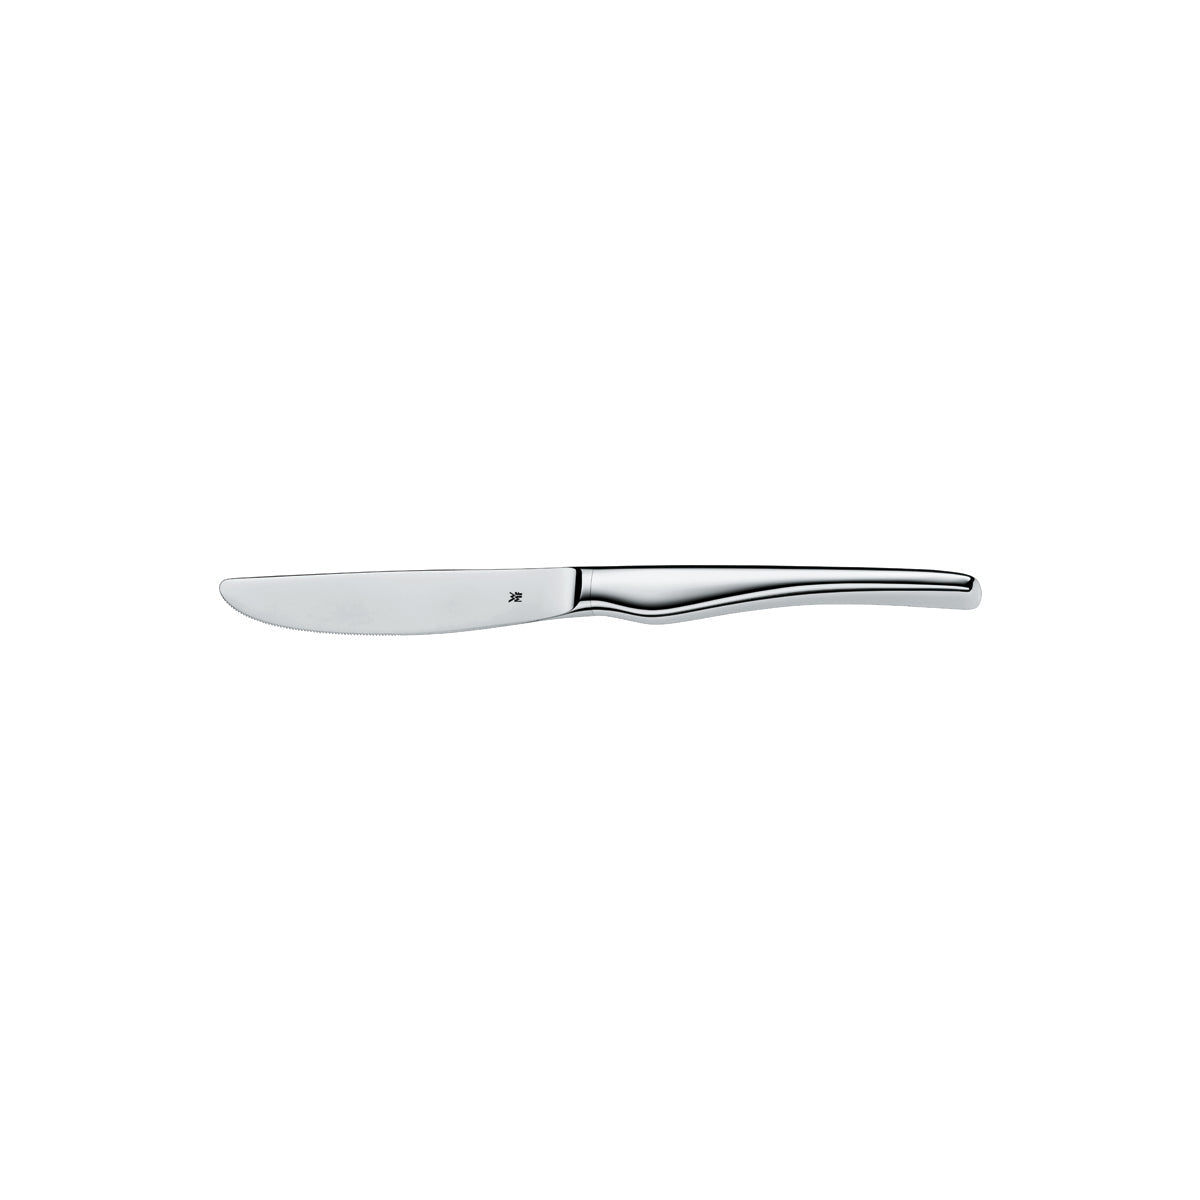 54.1603.6049 WMF Epos Table Knife Stainless Steel Tomkin Australia Hospitality Supplies